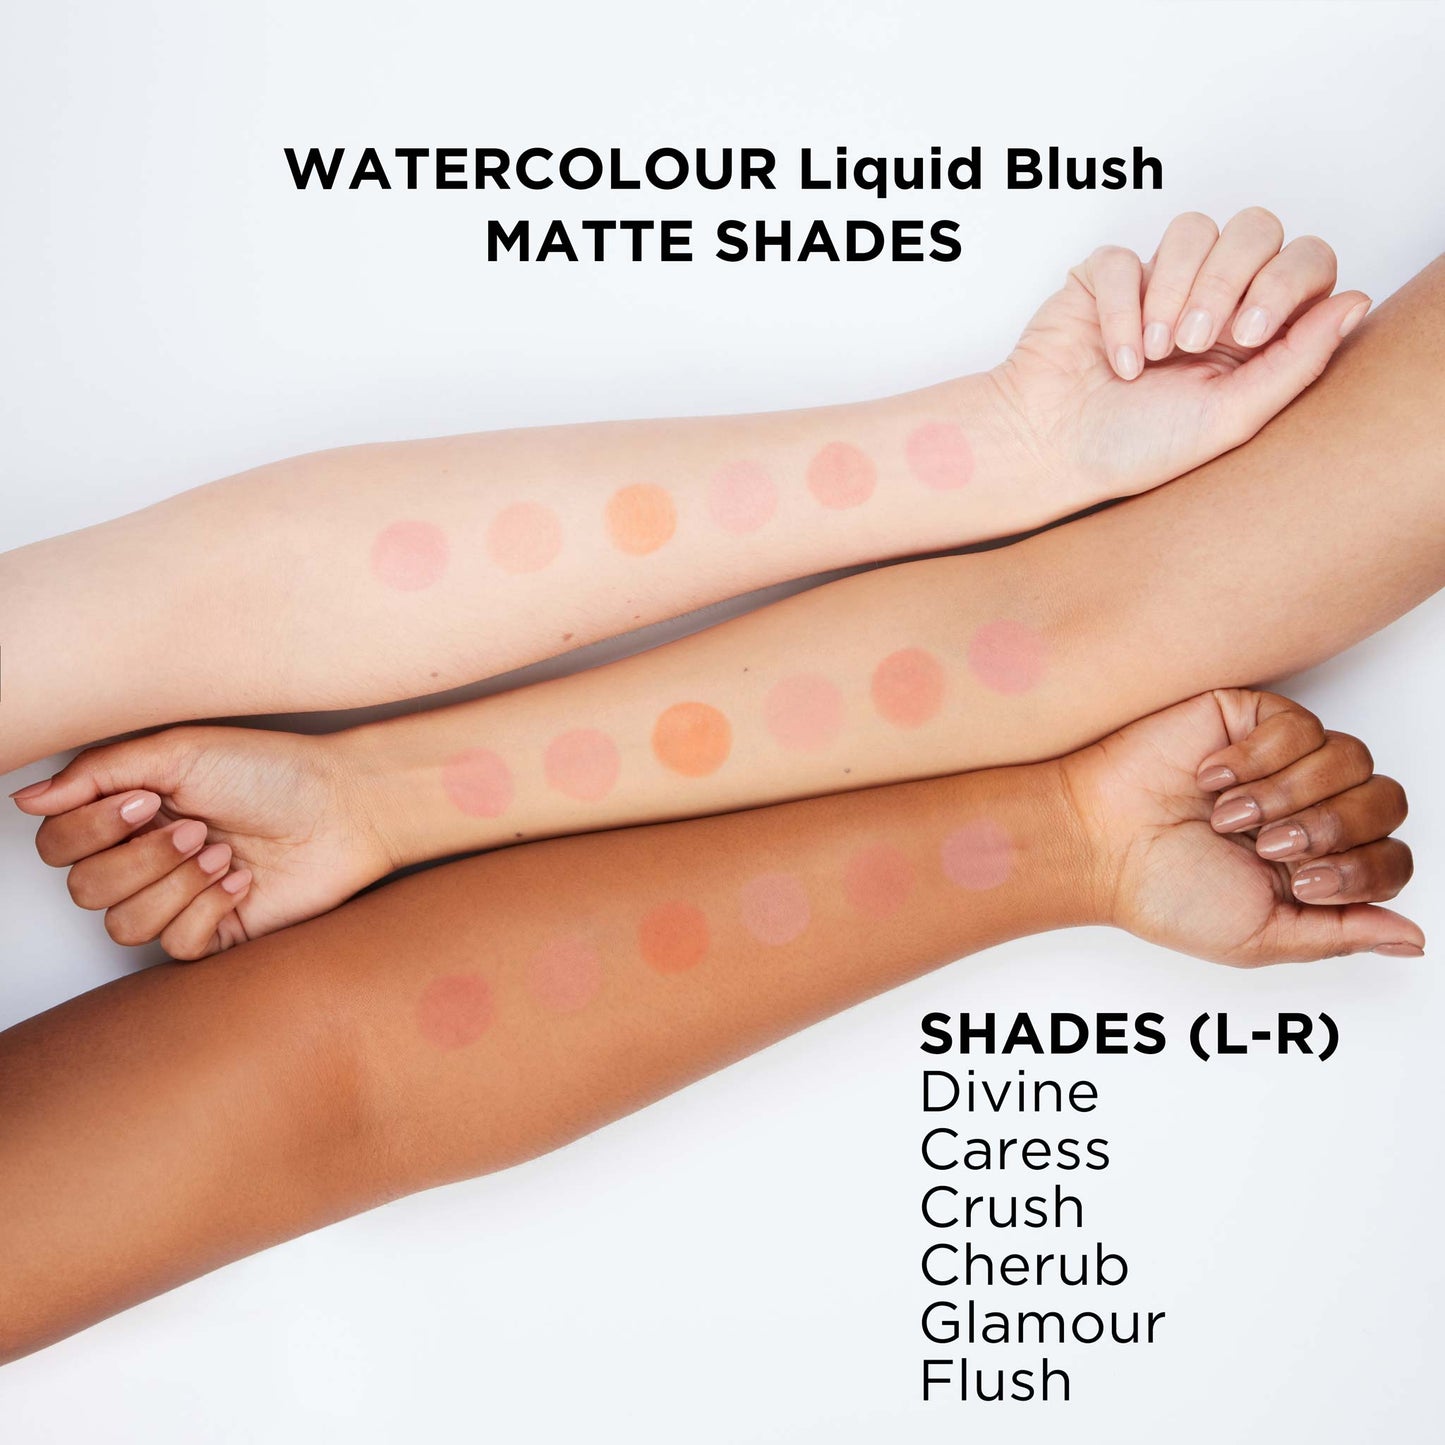 Daniel Sandler Watercolour Liquid Blush Swatches - Matte Finish Shades